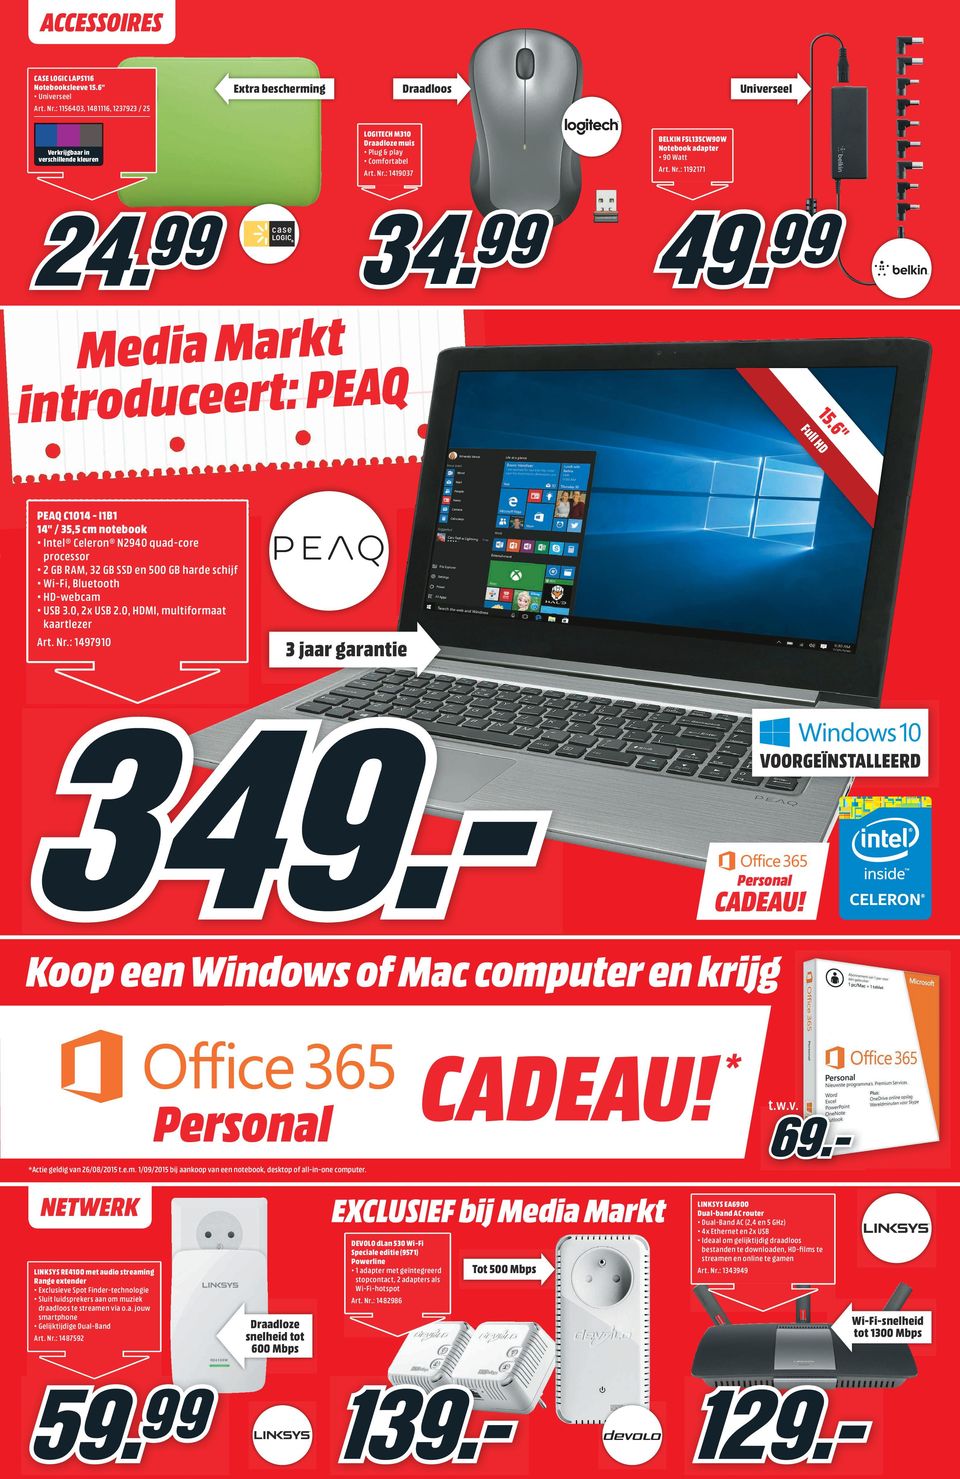 Media Markt Q A P : t r e e c u d o r t in PAQ C1014 - I1B1 14" / 35,5 cm notebook Intel Celeron N2940 quad-core processor 2 GB RAM, 32 GB SSD en 500 GB harde schijf Wi-Fi, Bluetooth HD-webcam USB 3.